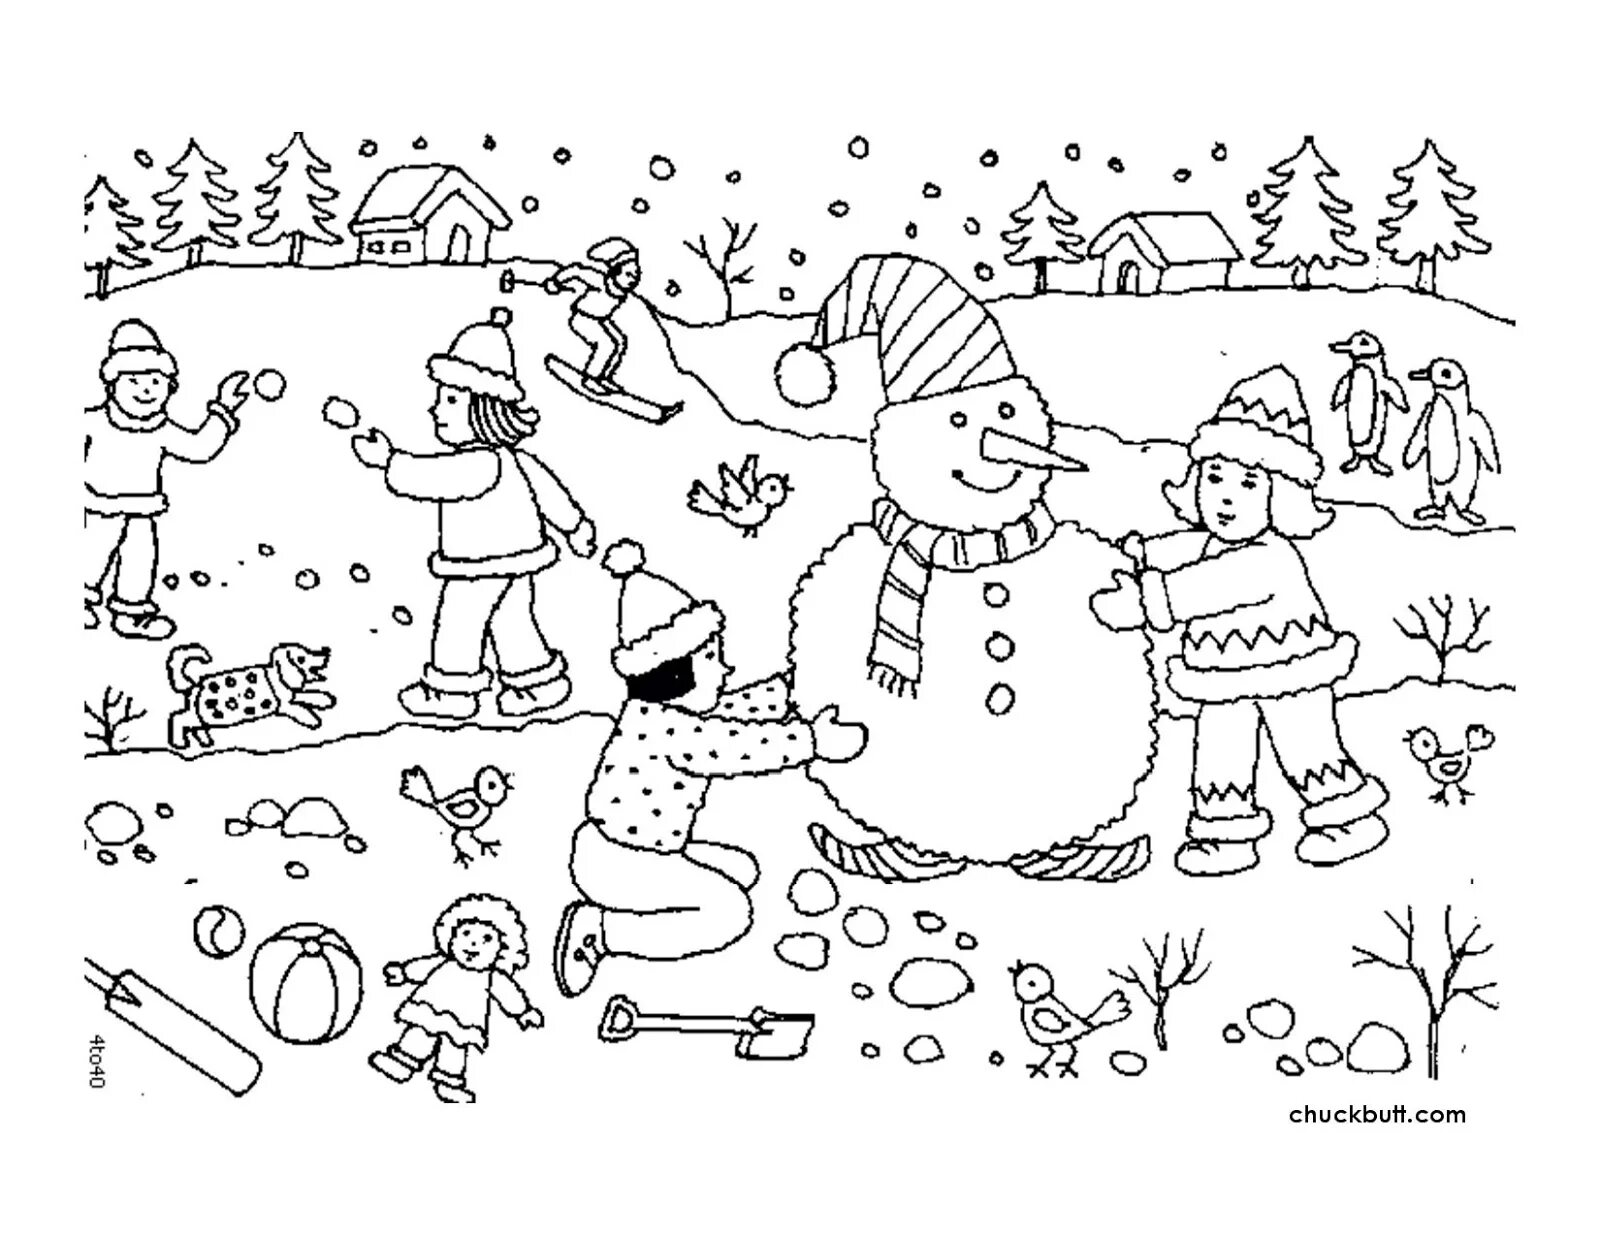 Children's fun in winter #4